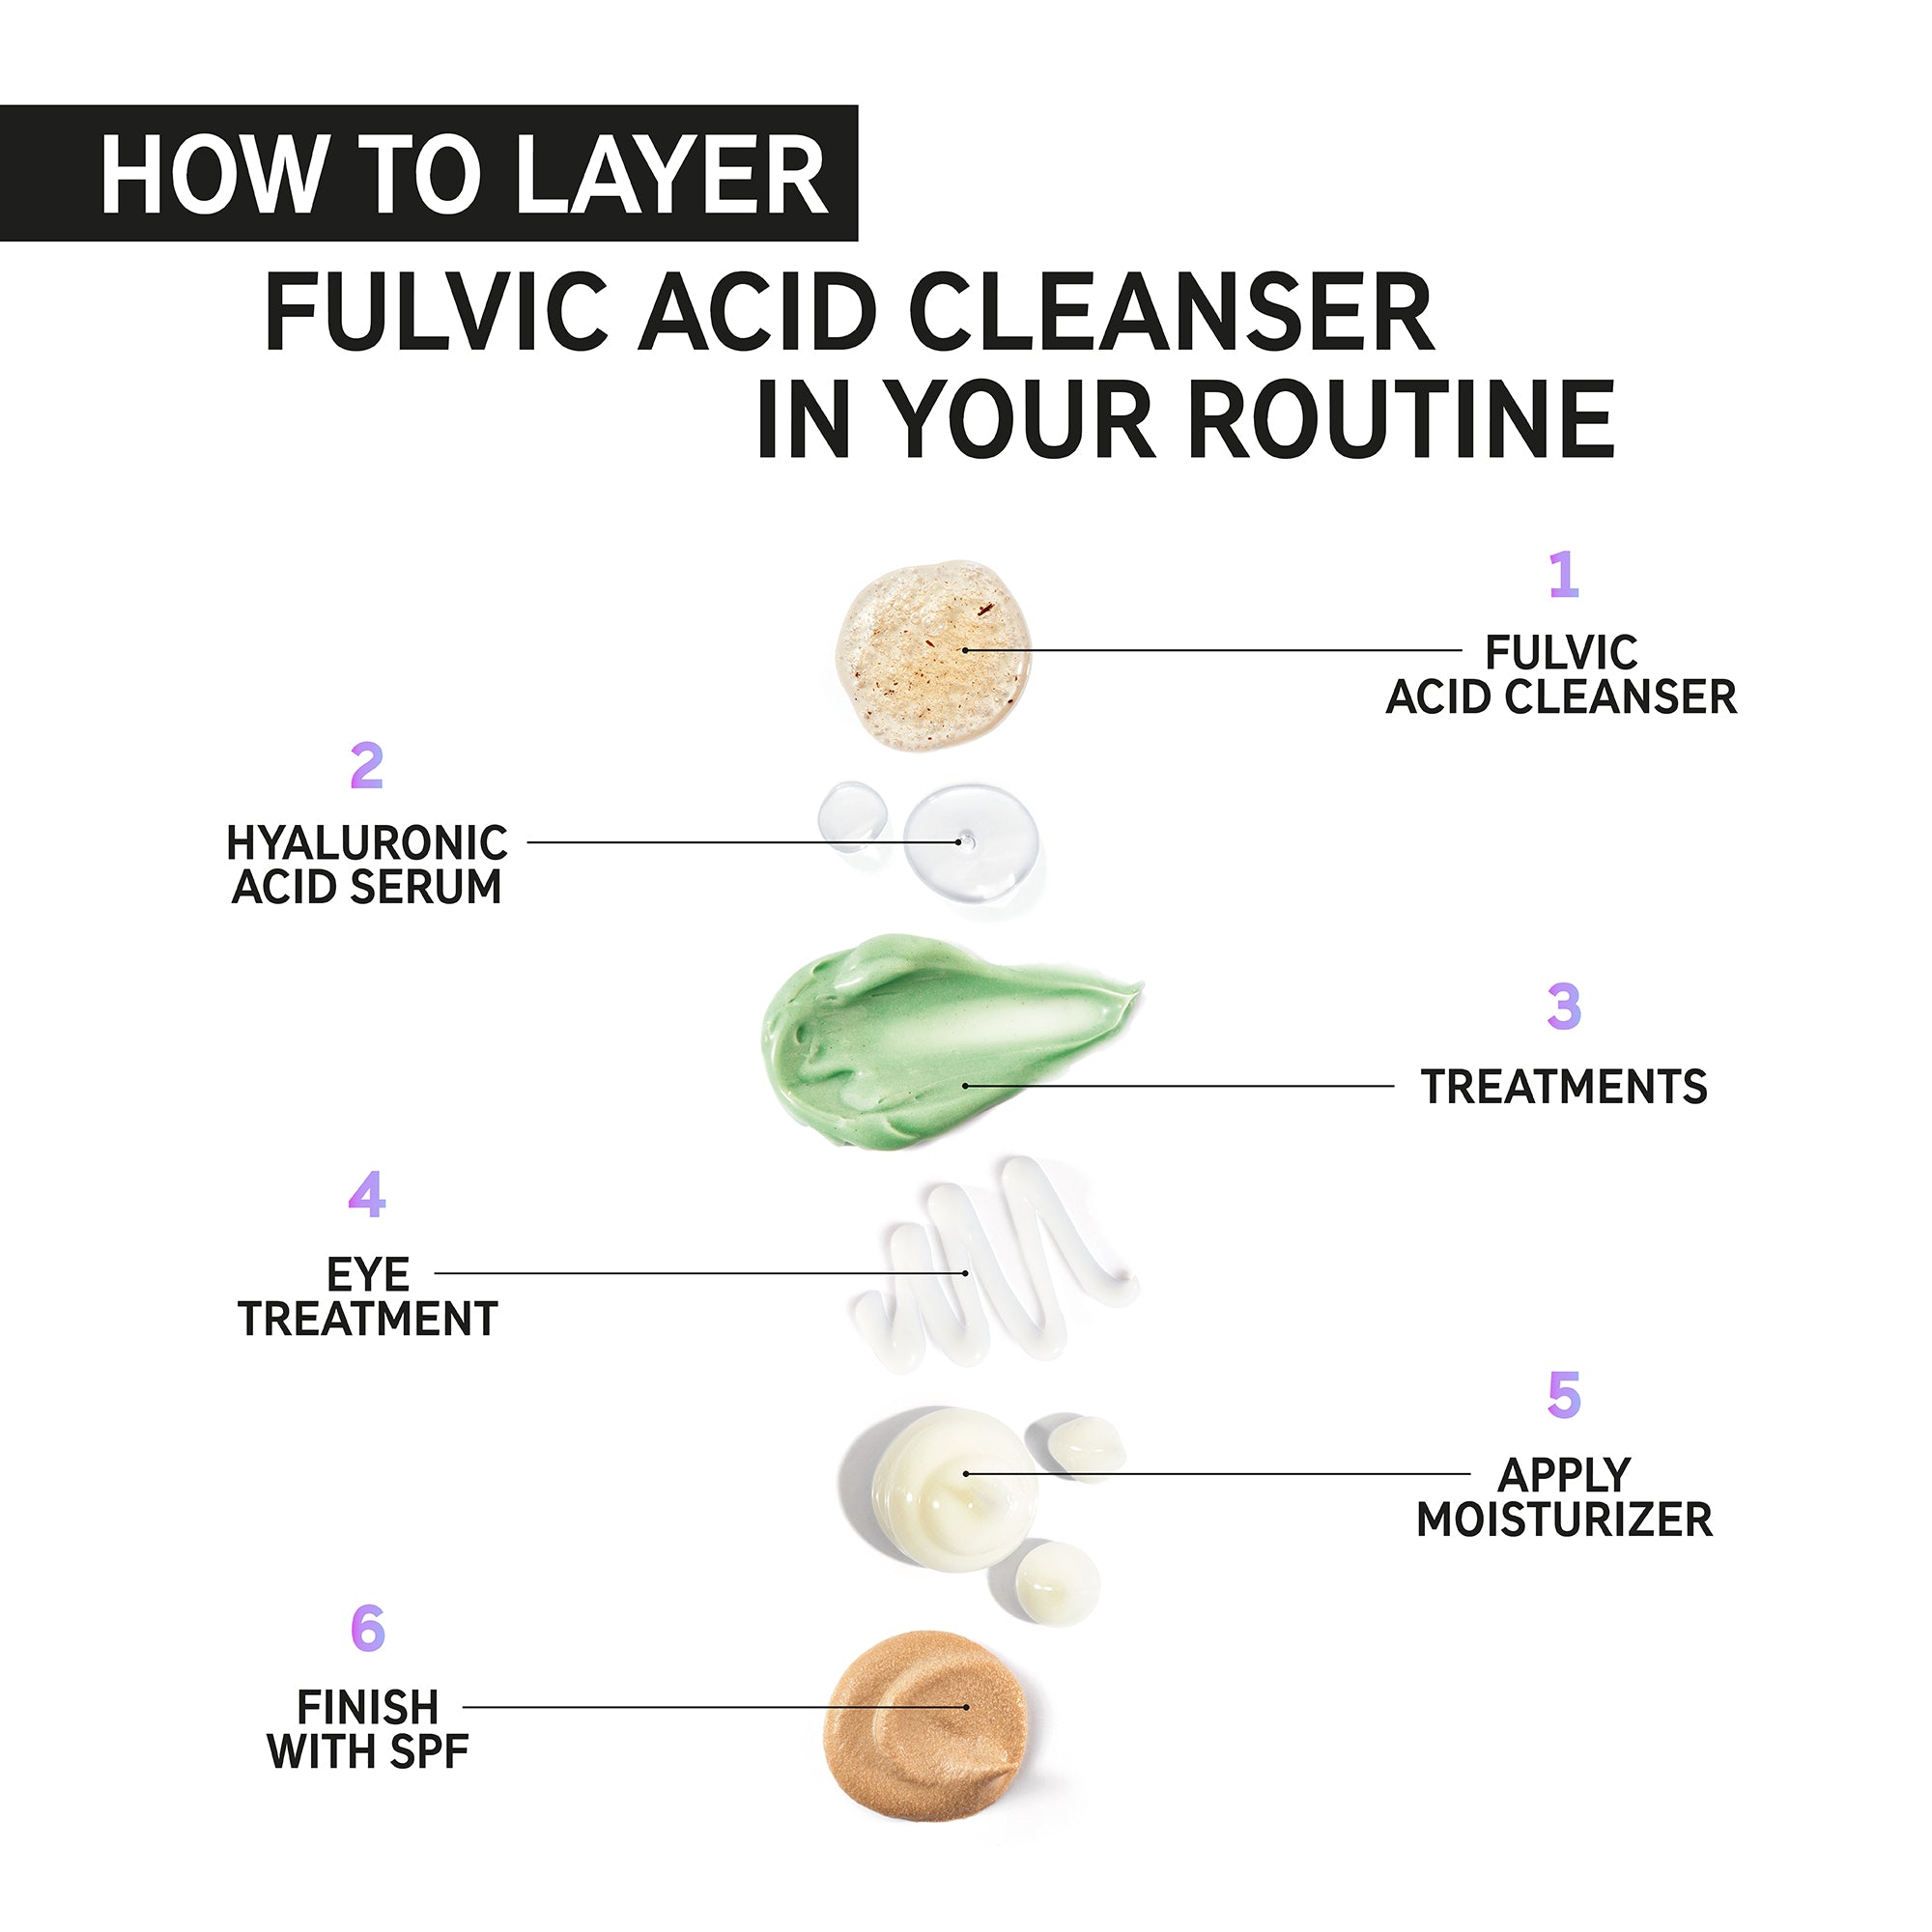 TIL Fulvic Acid Cleanser